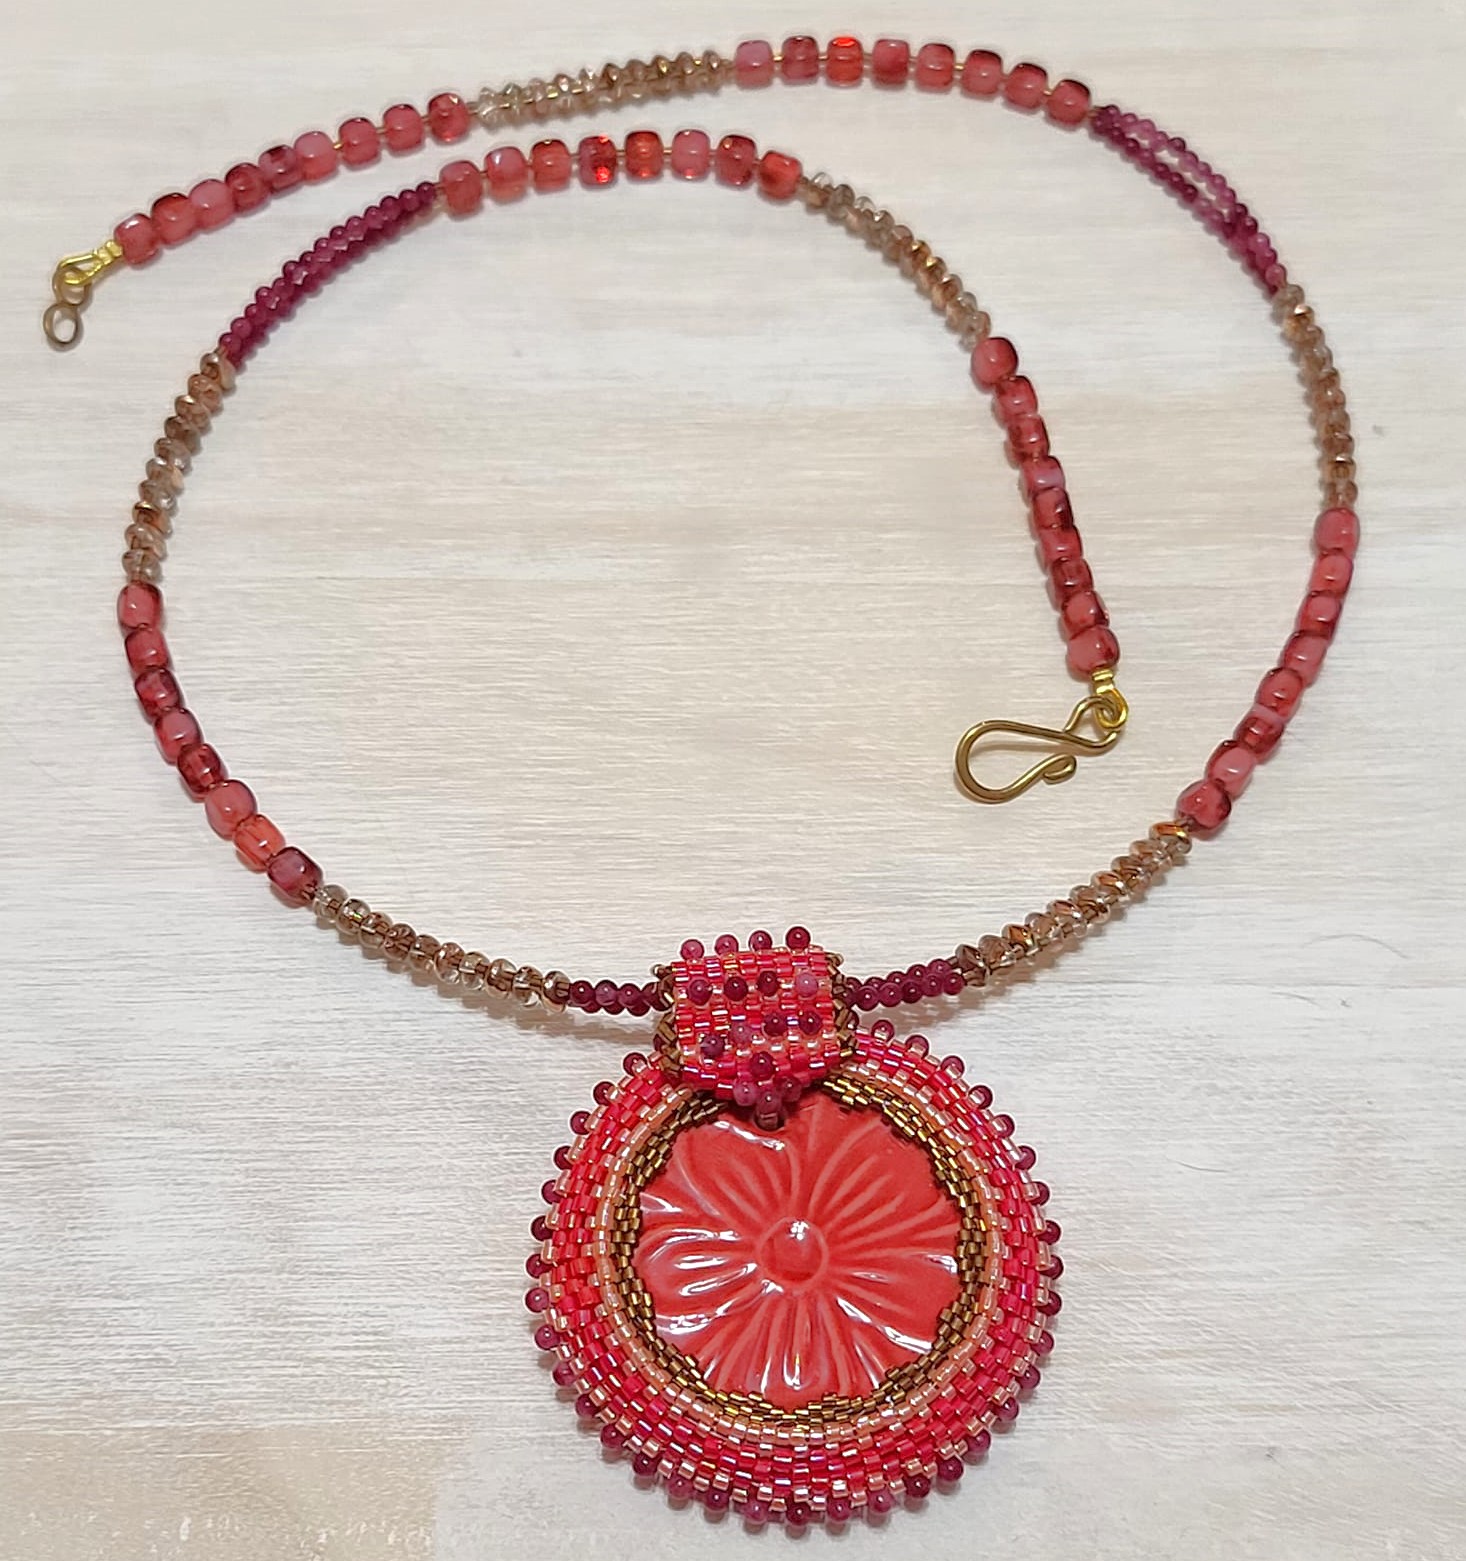 Gemstone necklace, cherry quartz with center ceramic medalion